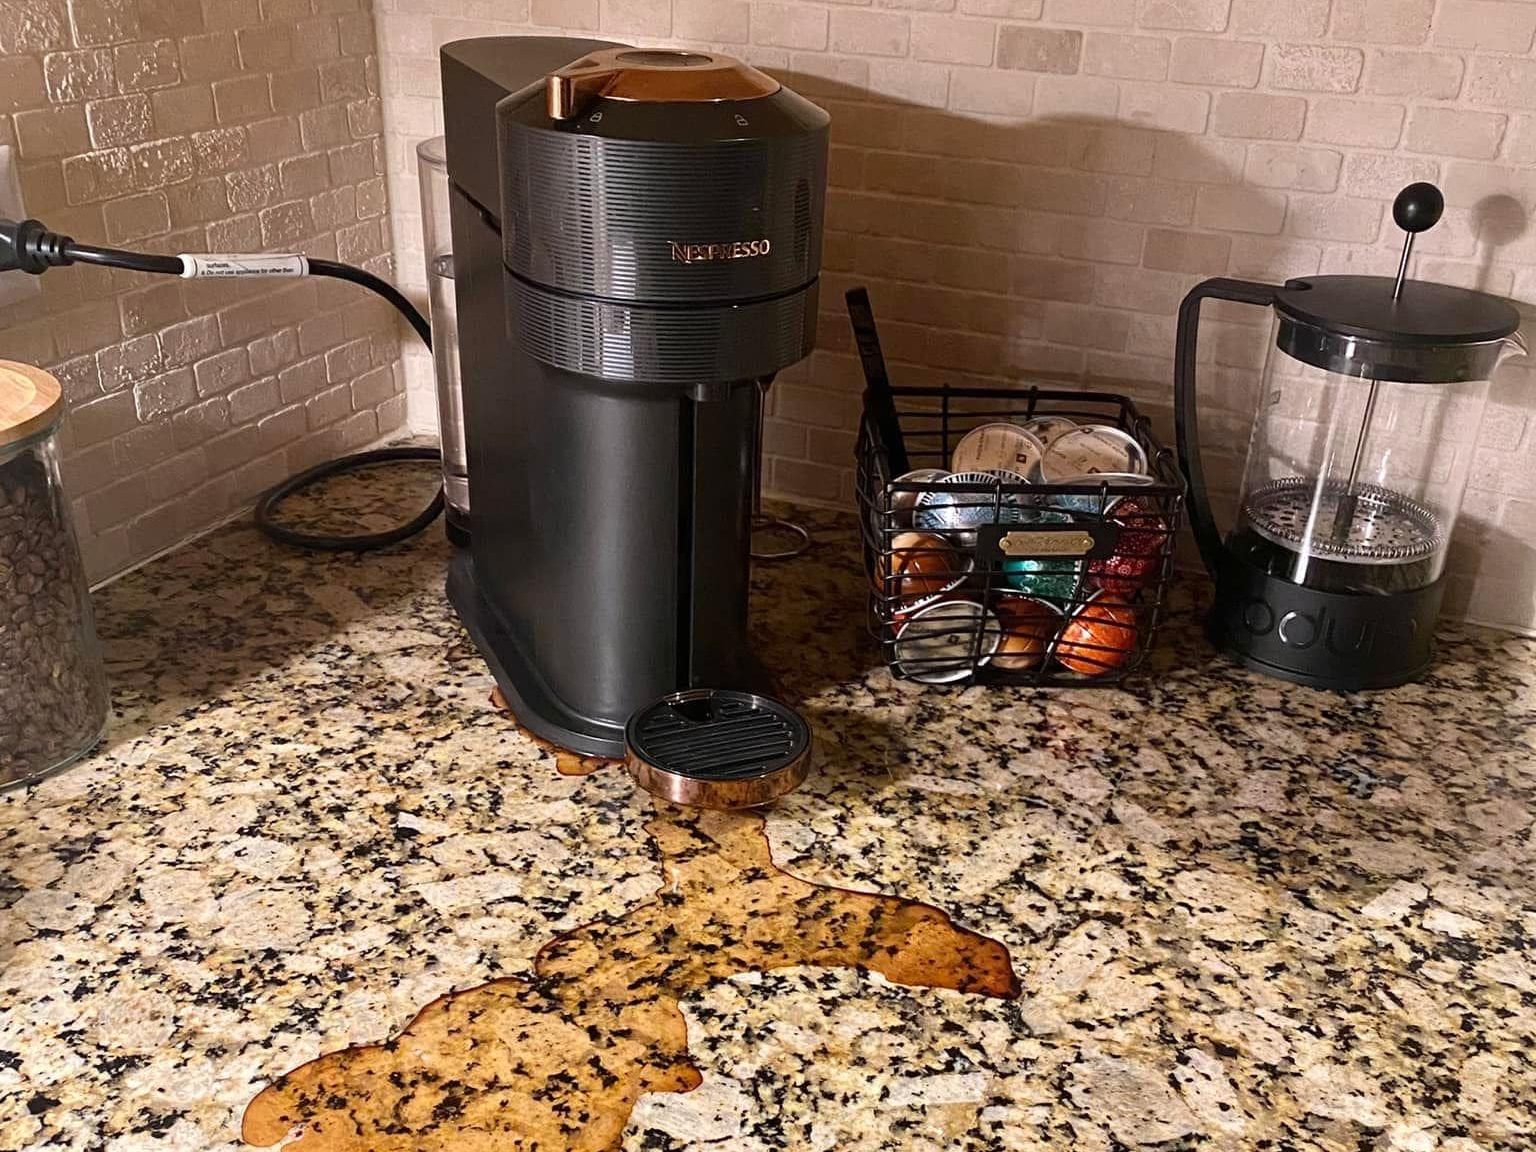 Nespresso machine leaking coffee